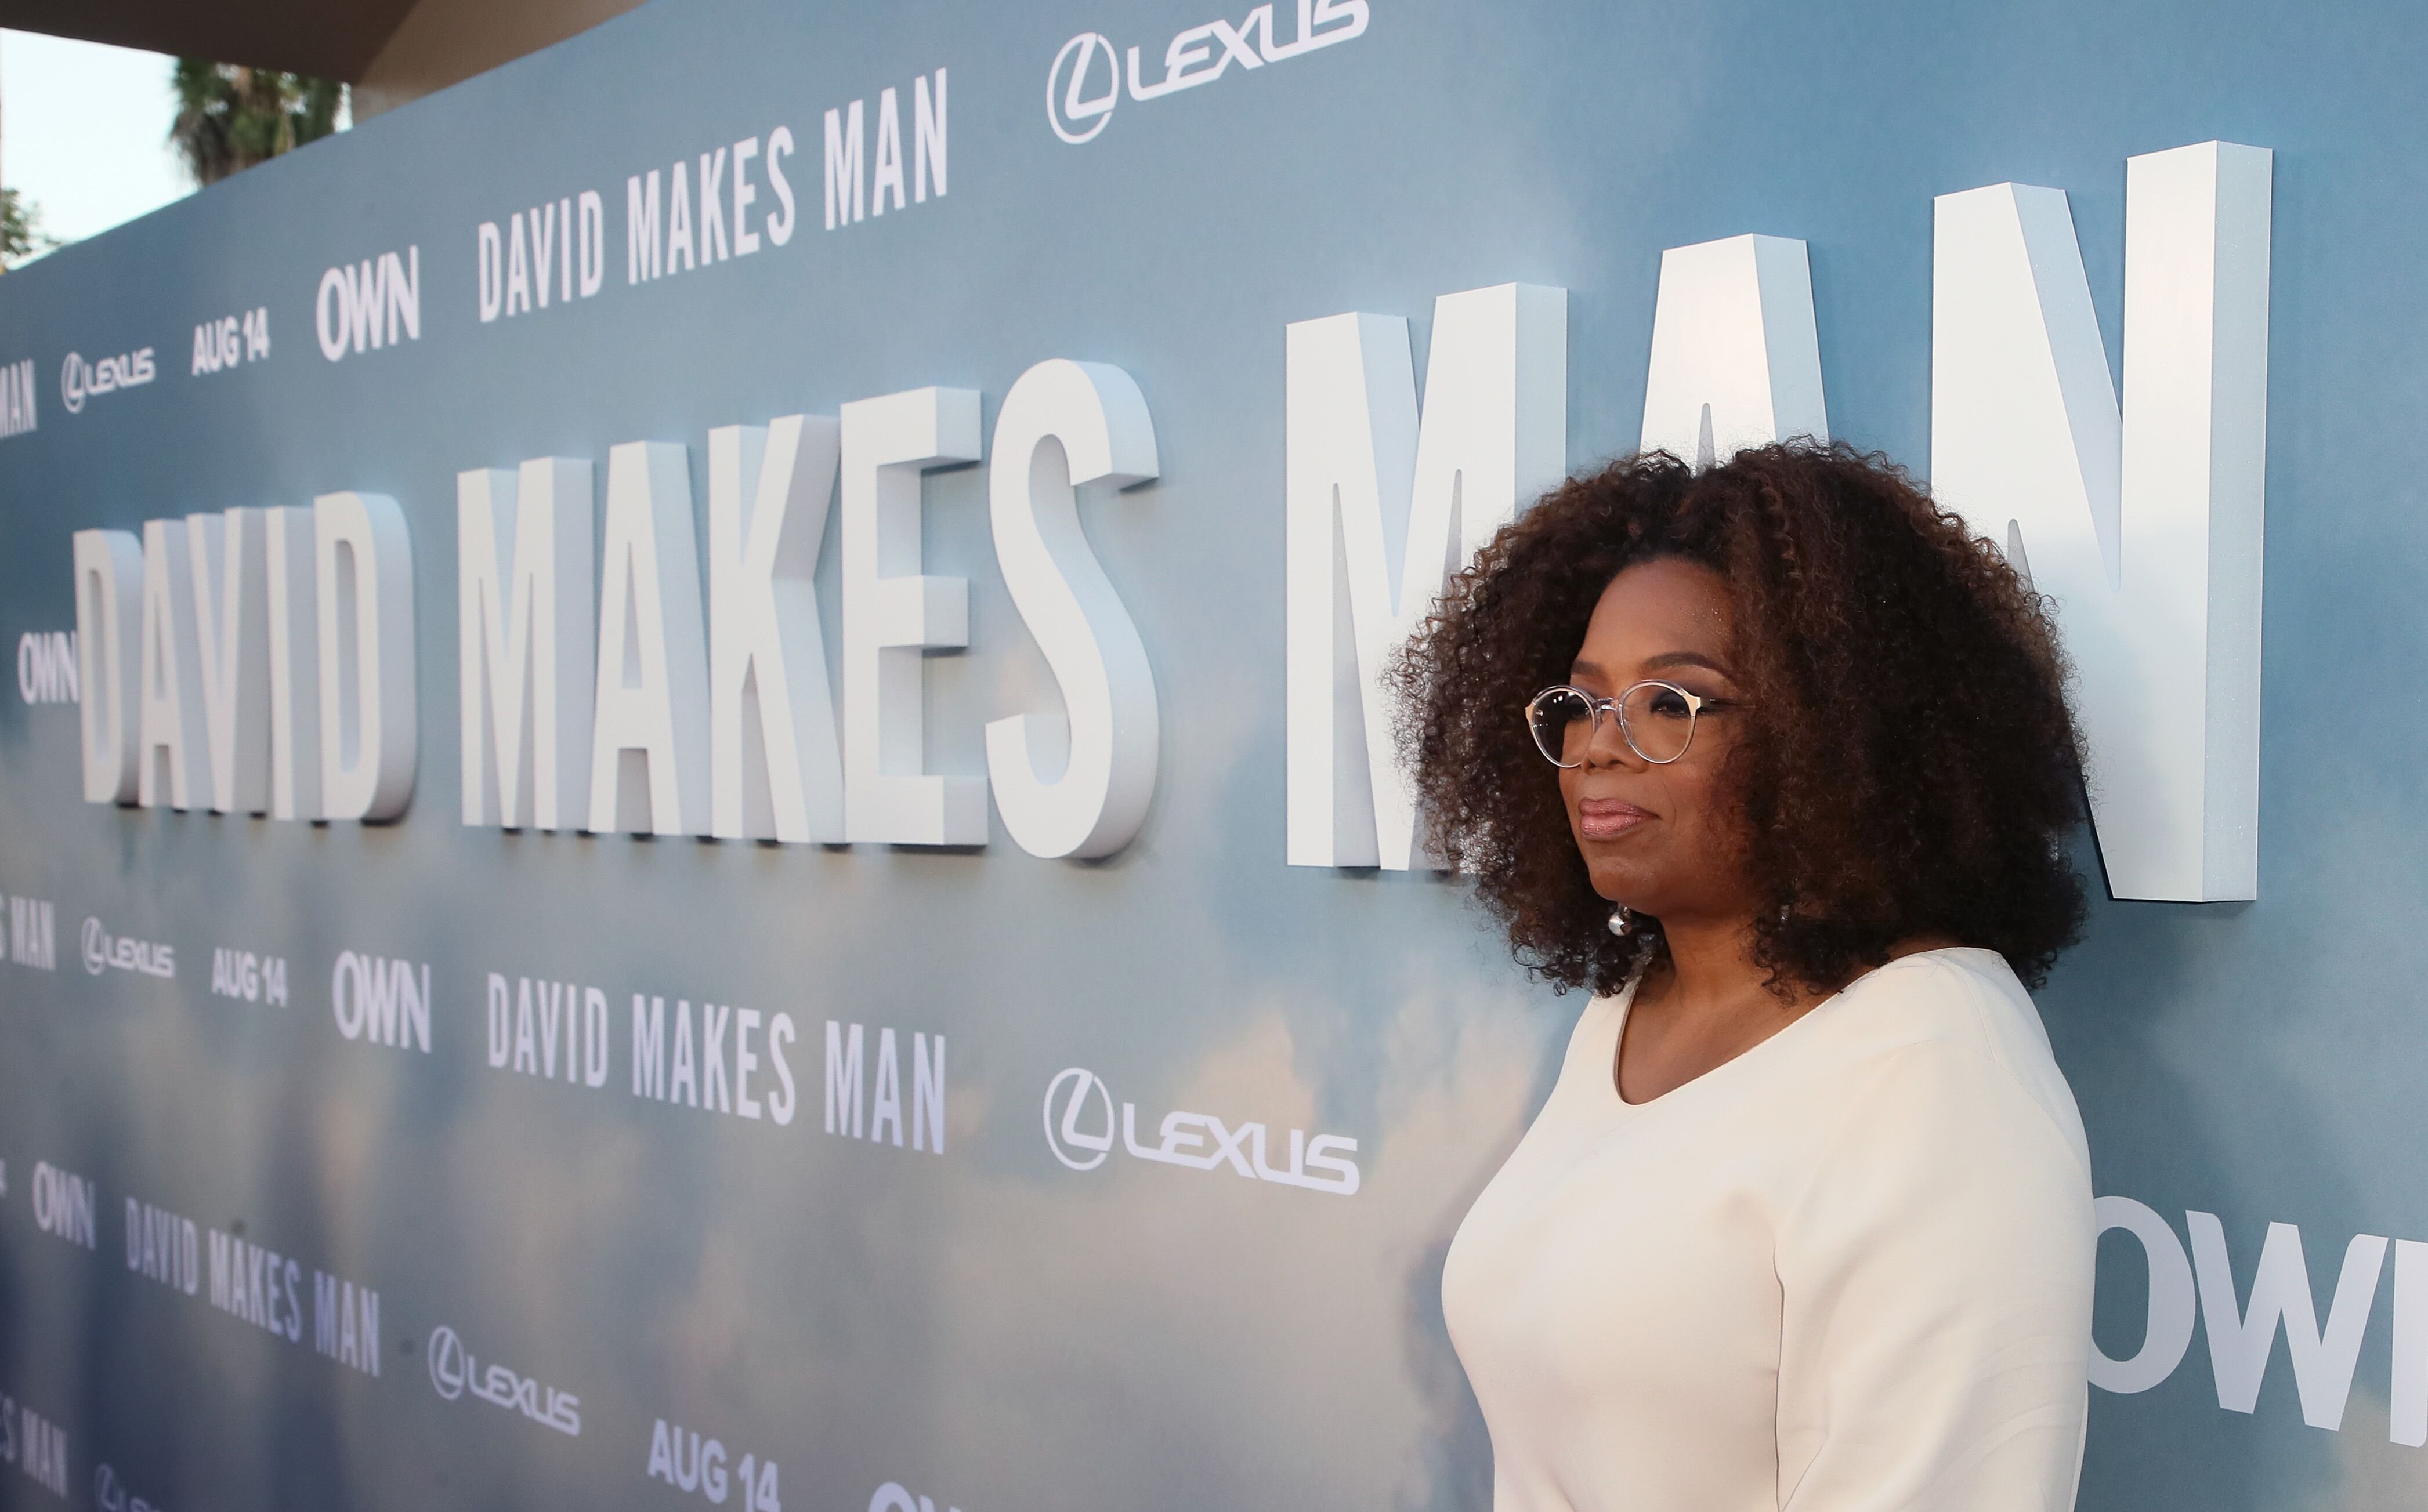 Oprah Winfrey at the "David Meets Man" event | Source: Getty Images/GlobalImagesUkraine